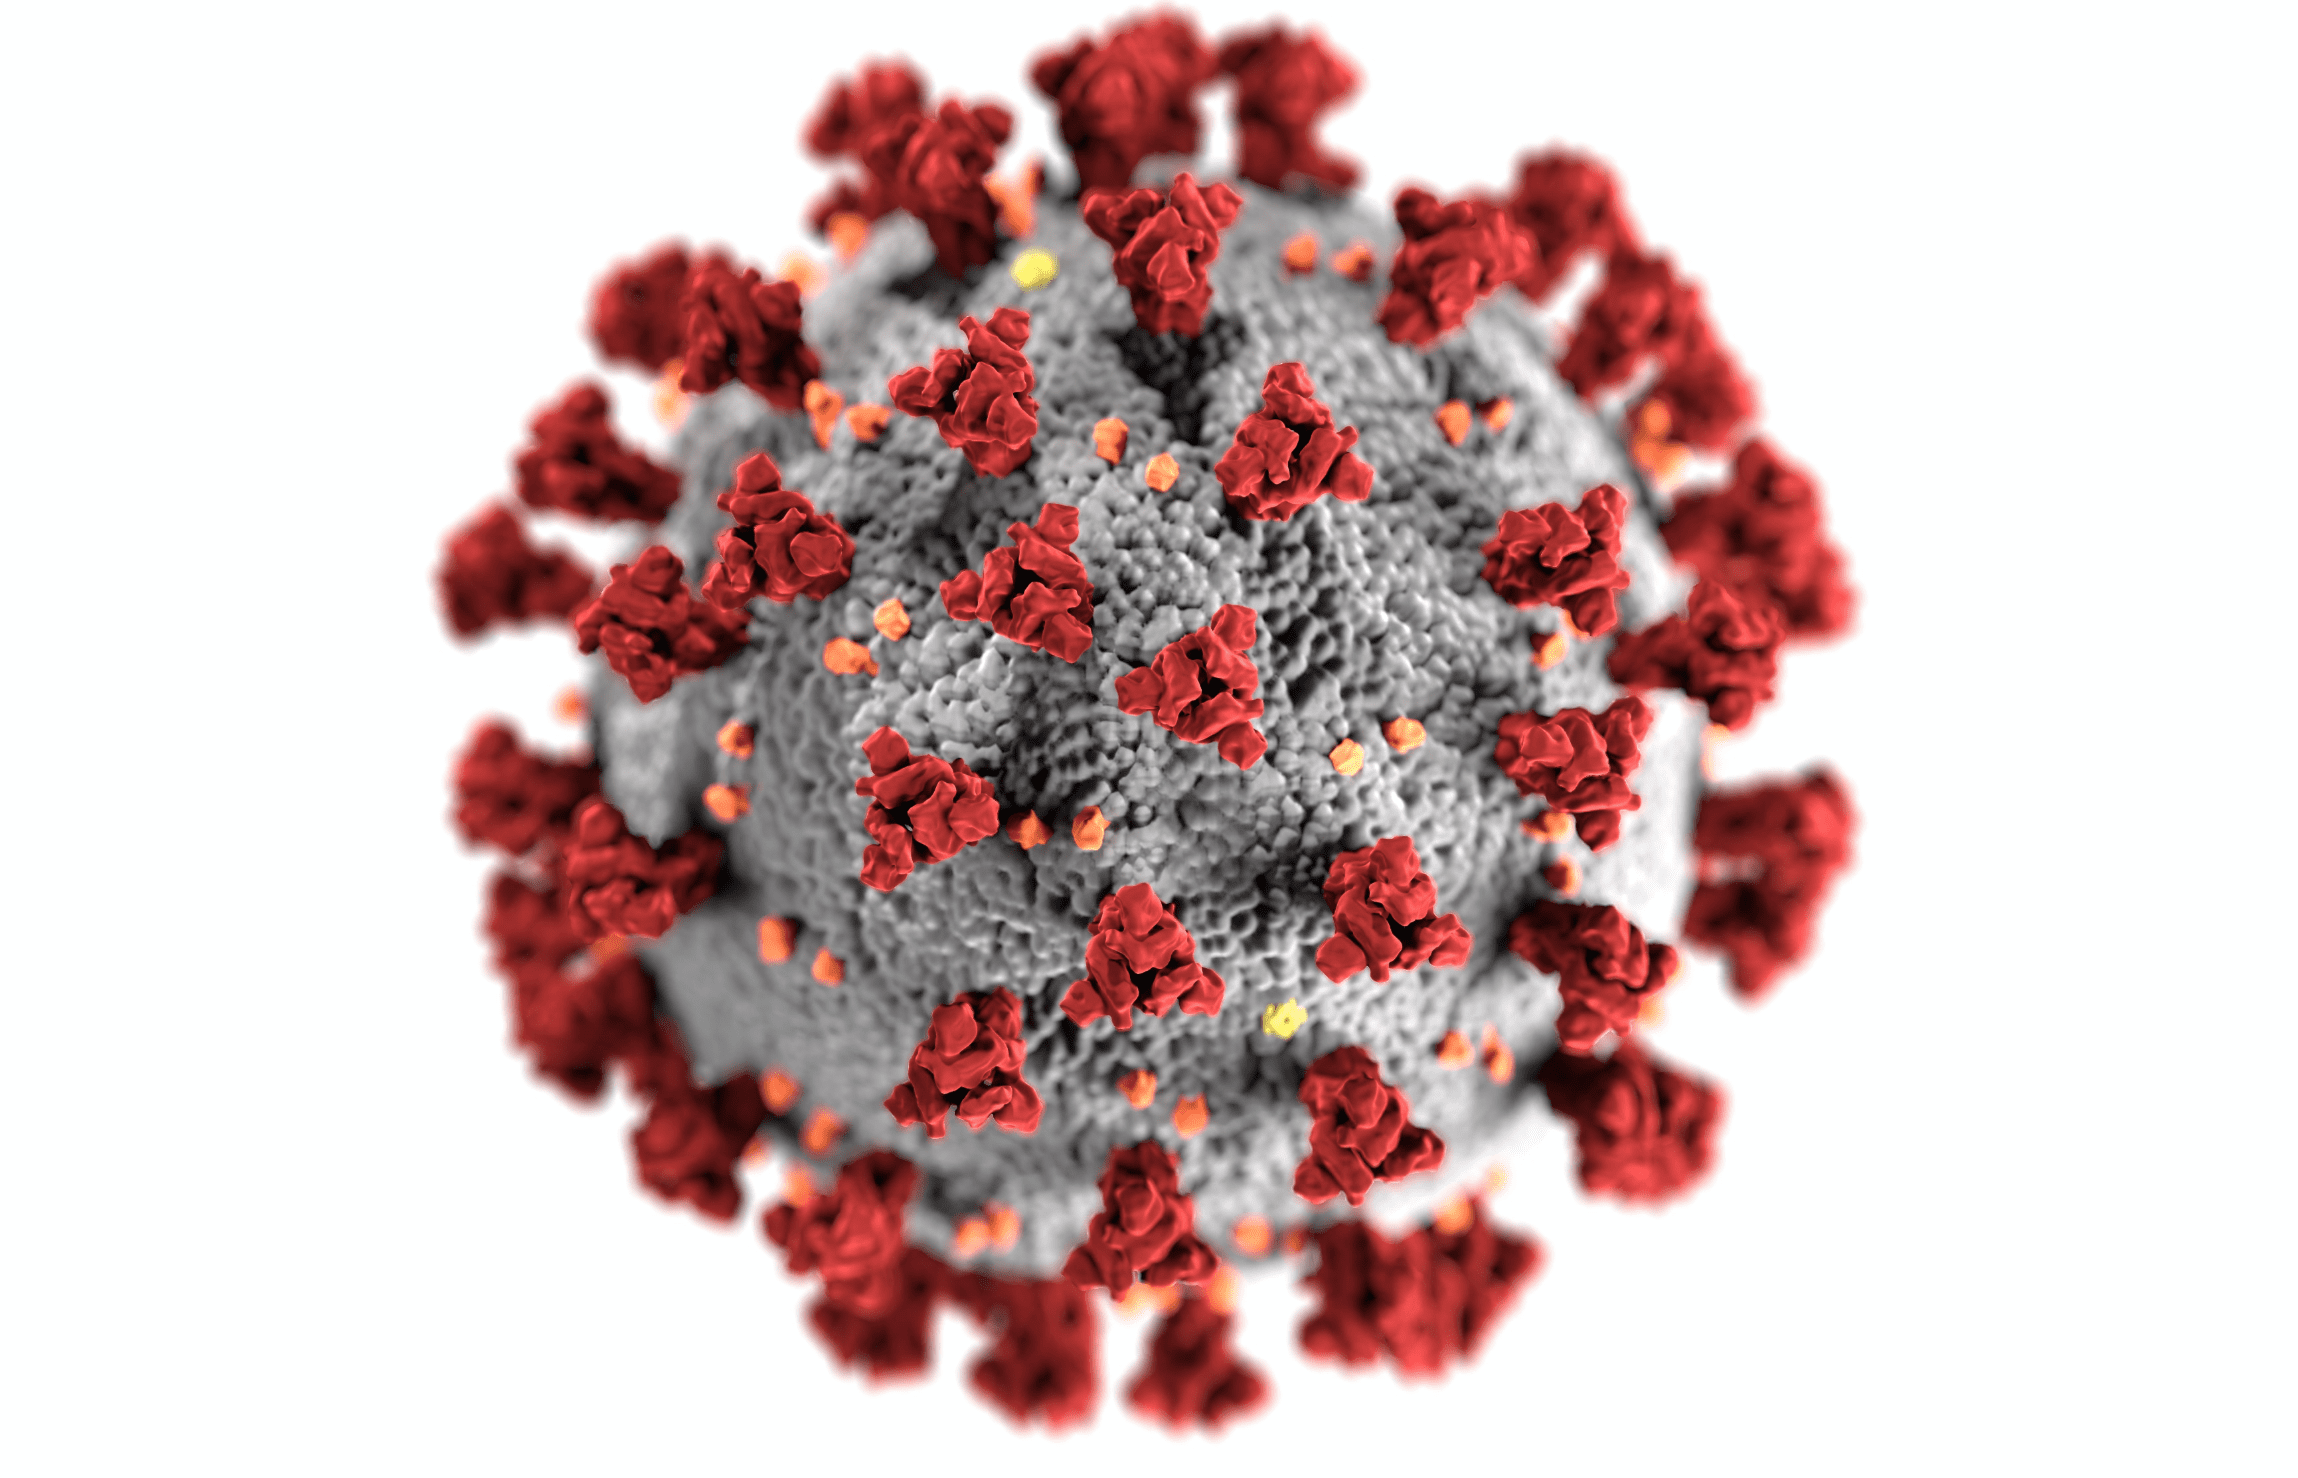 Microscopic illustration of the corona virus. | Source: Pexels